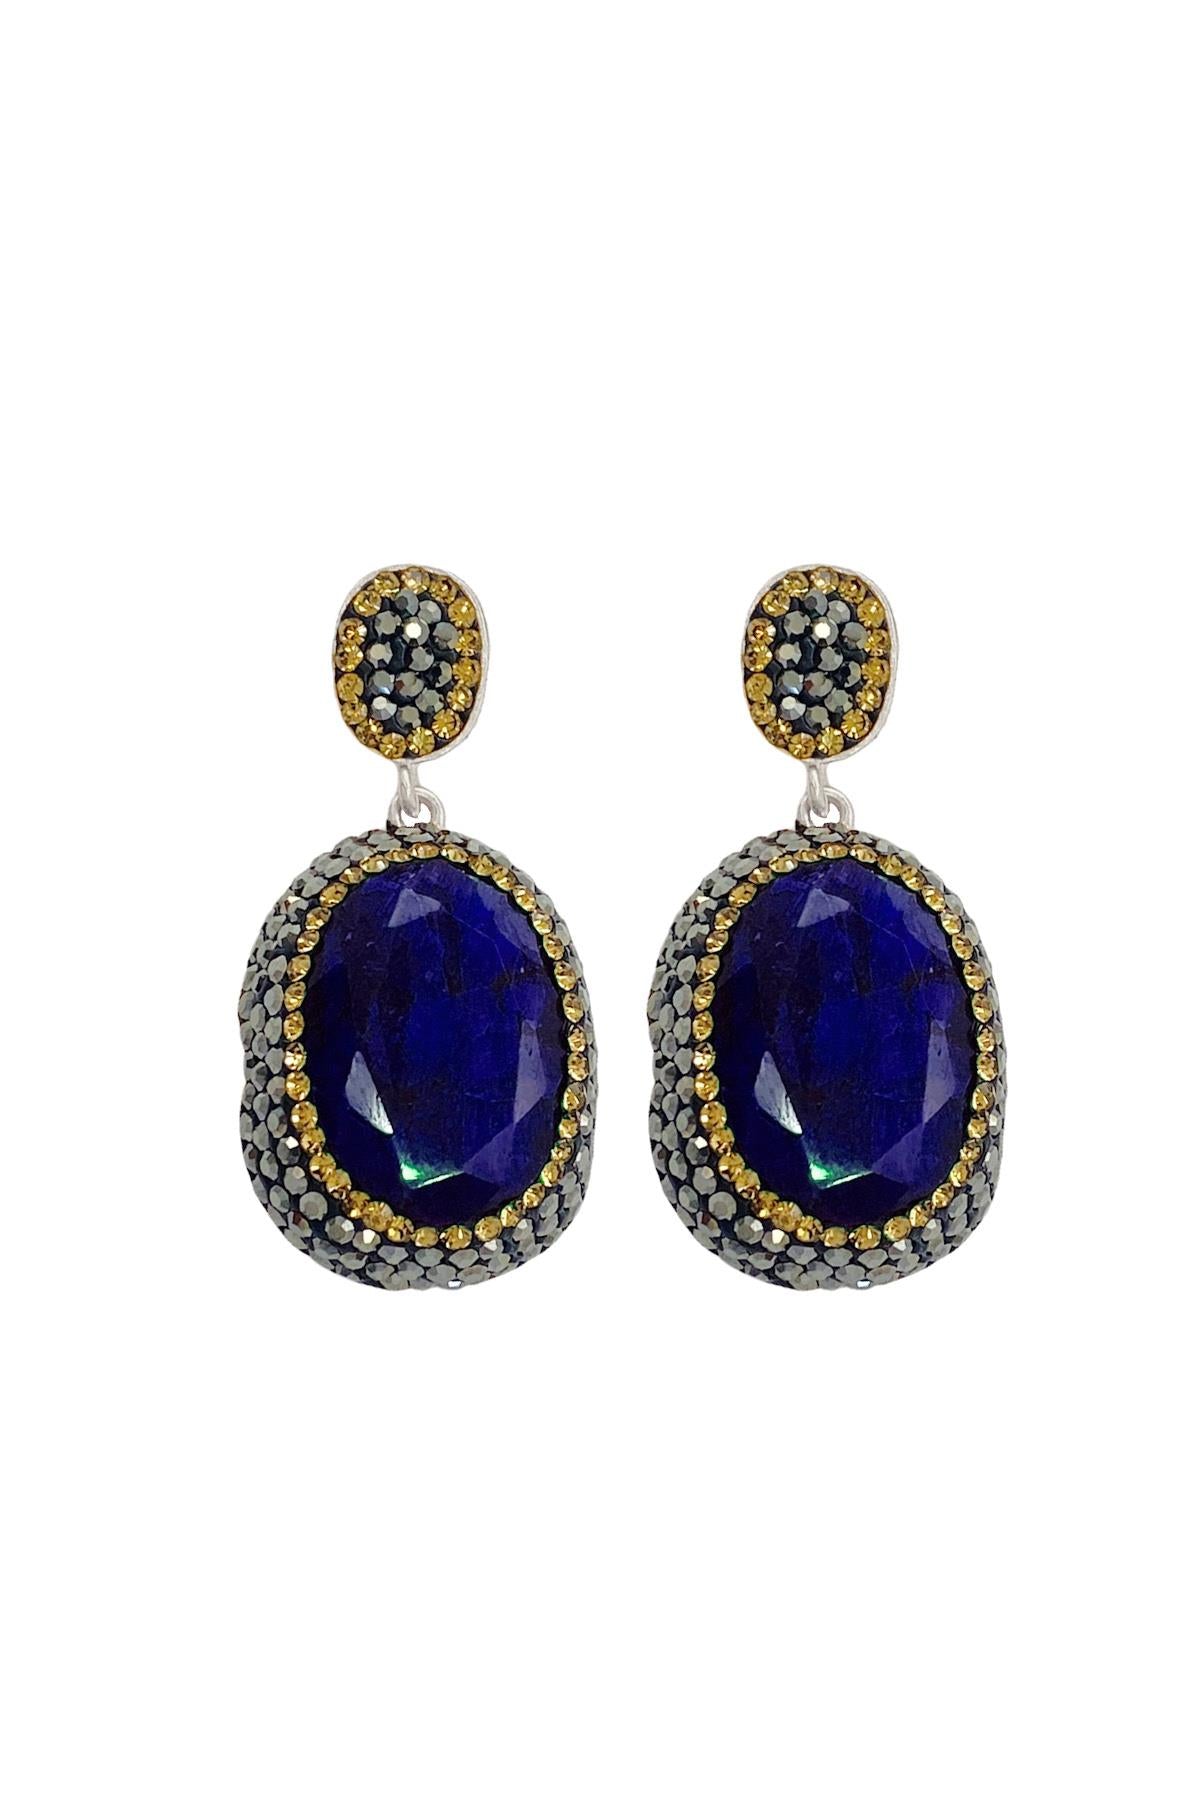 Acacia Series Blue Sapphire Natural Stone Silver Women's Earrings